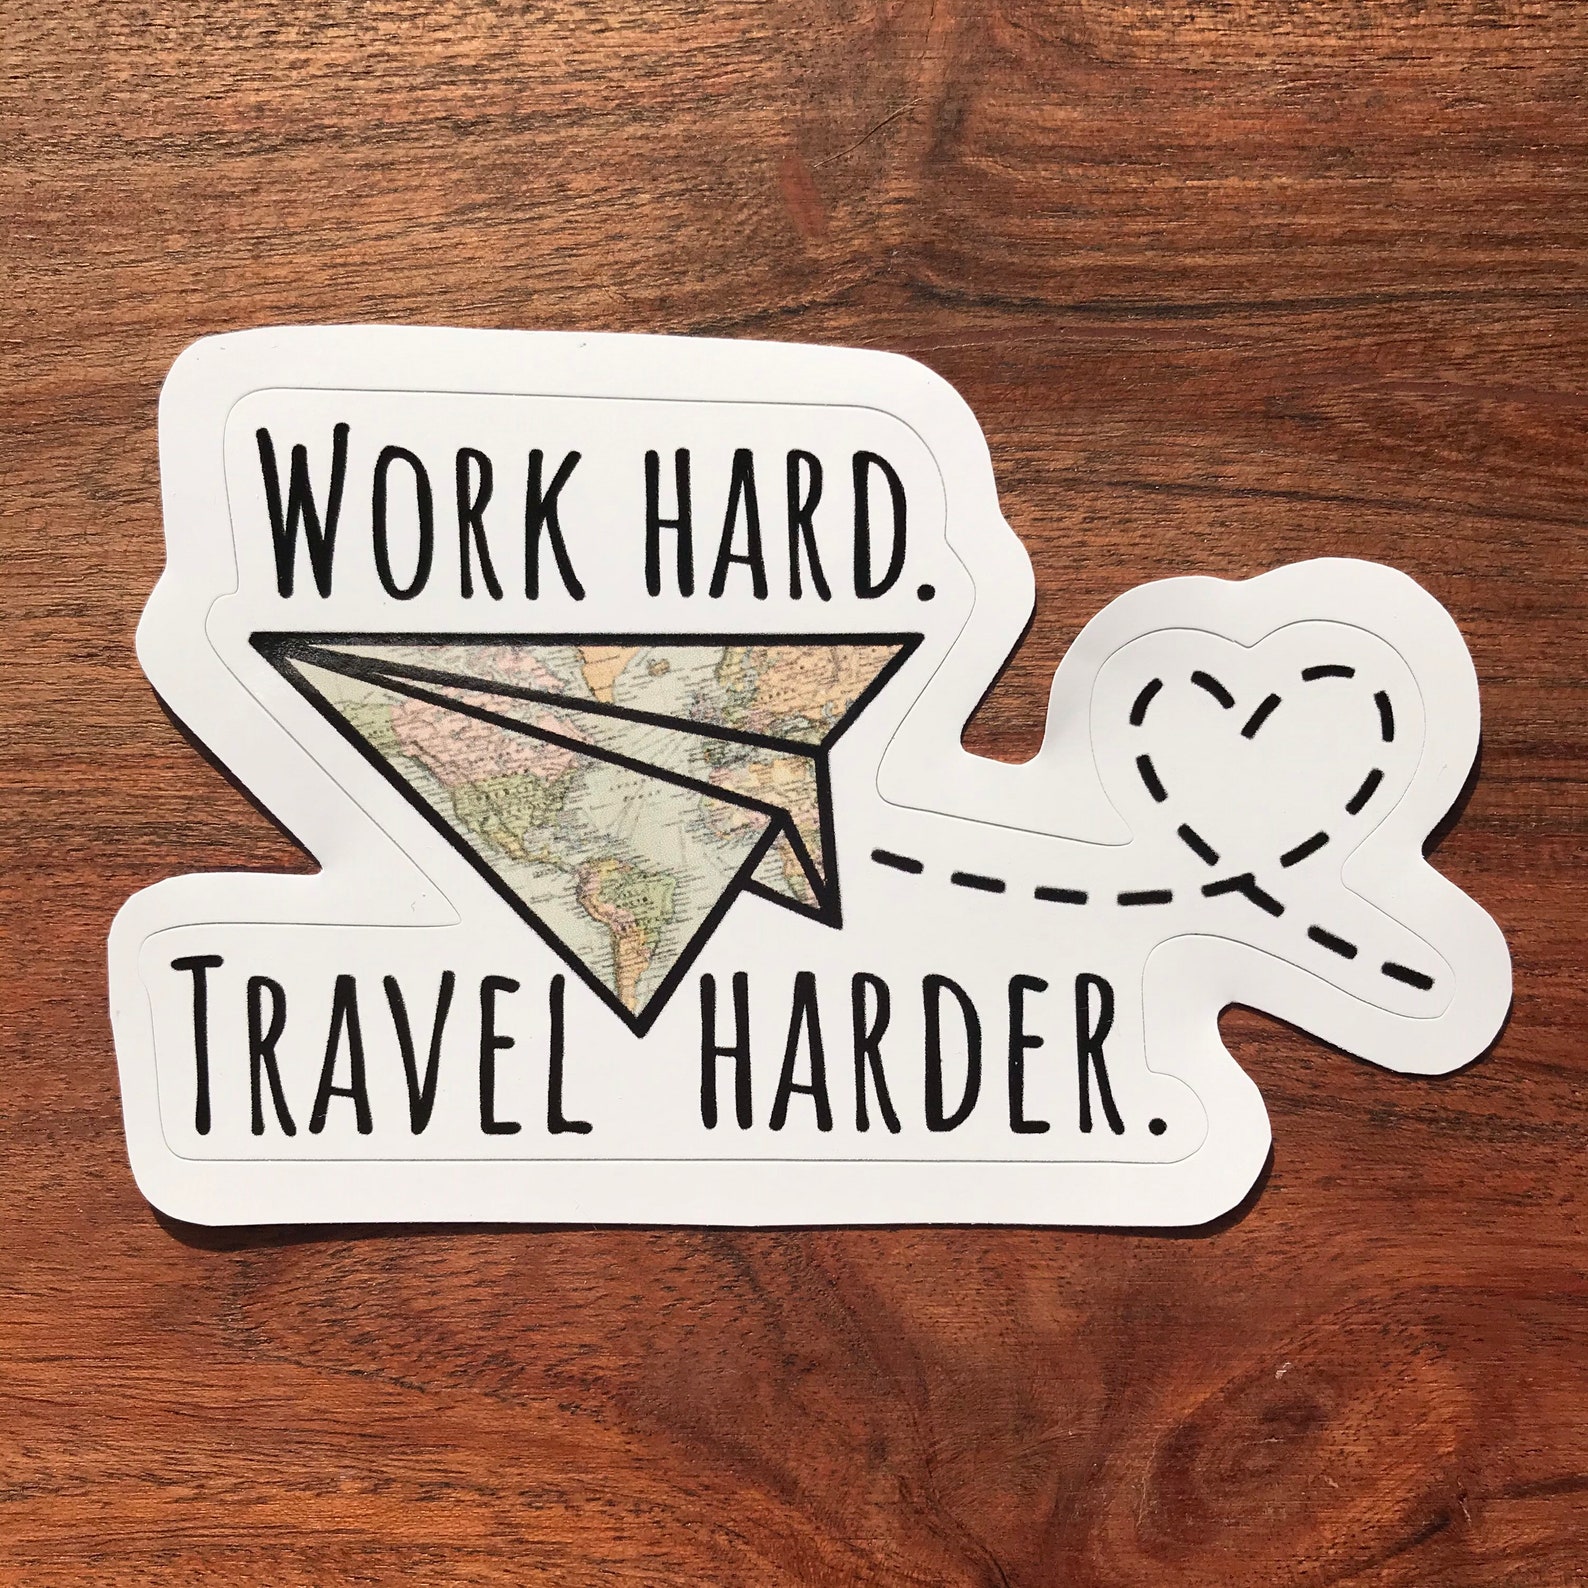 work hard travel harder meaning